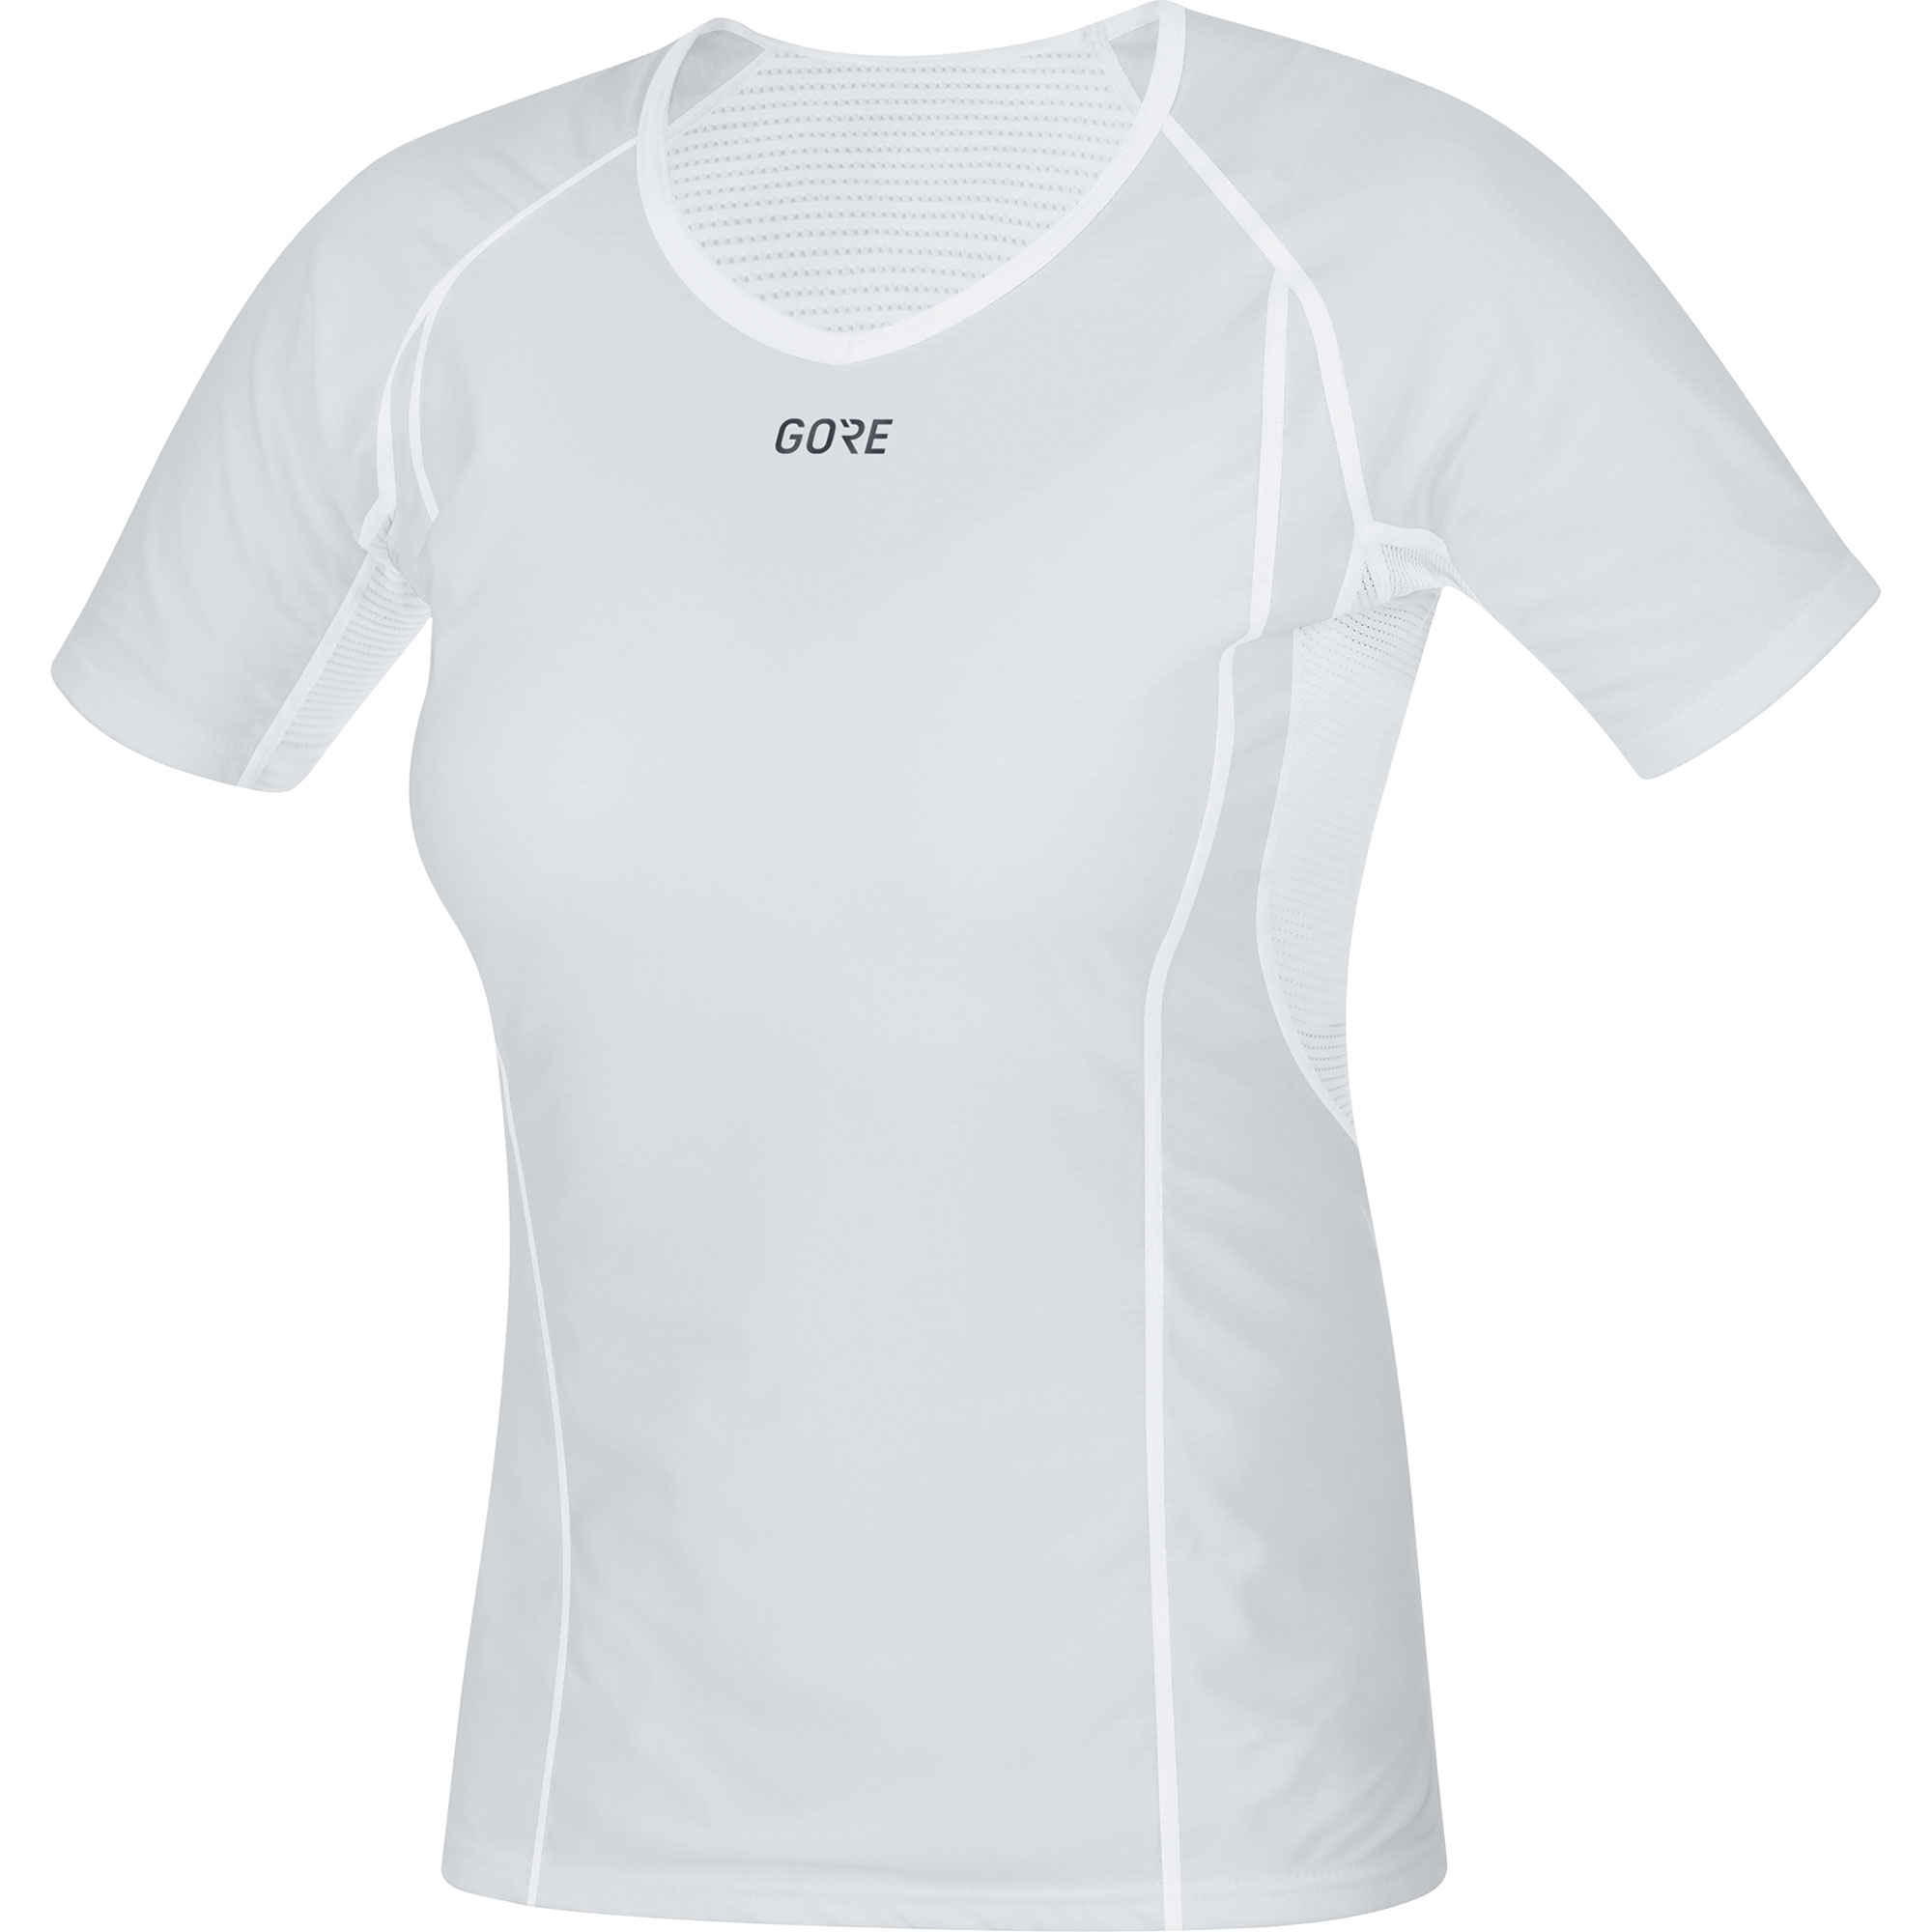 GOREWEAR Windstopper Base Layer Shirt - Women's - Women